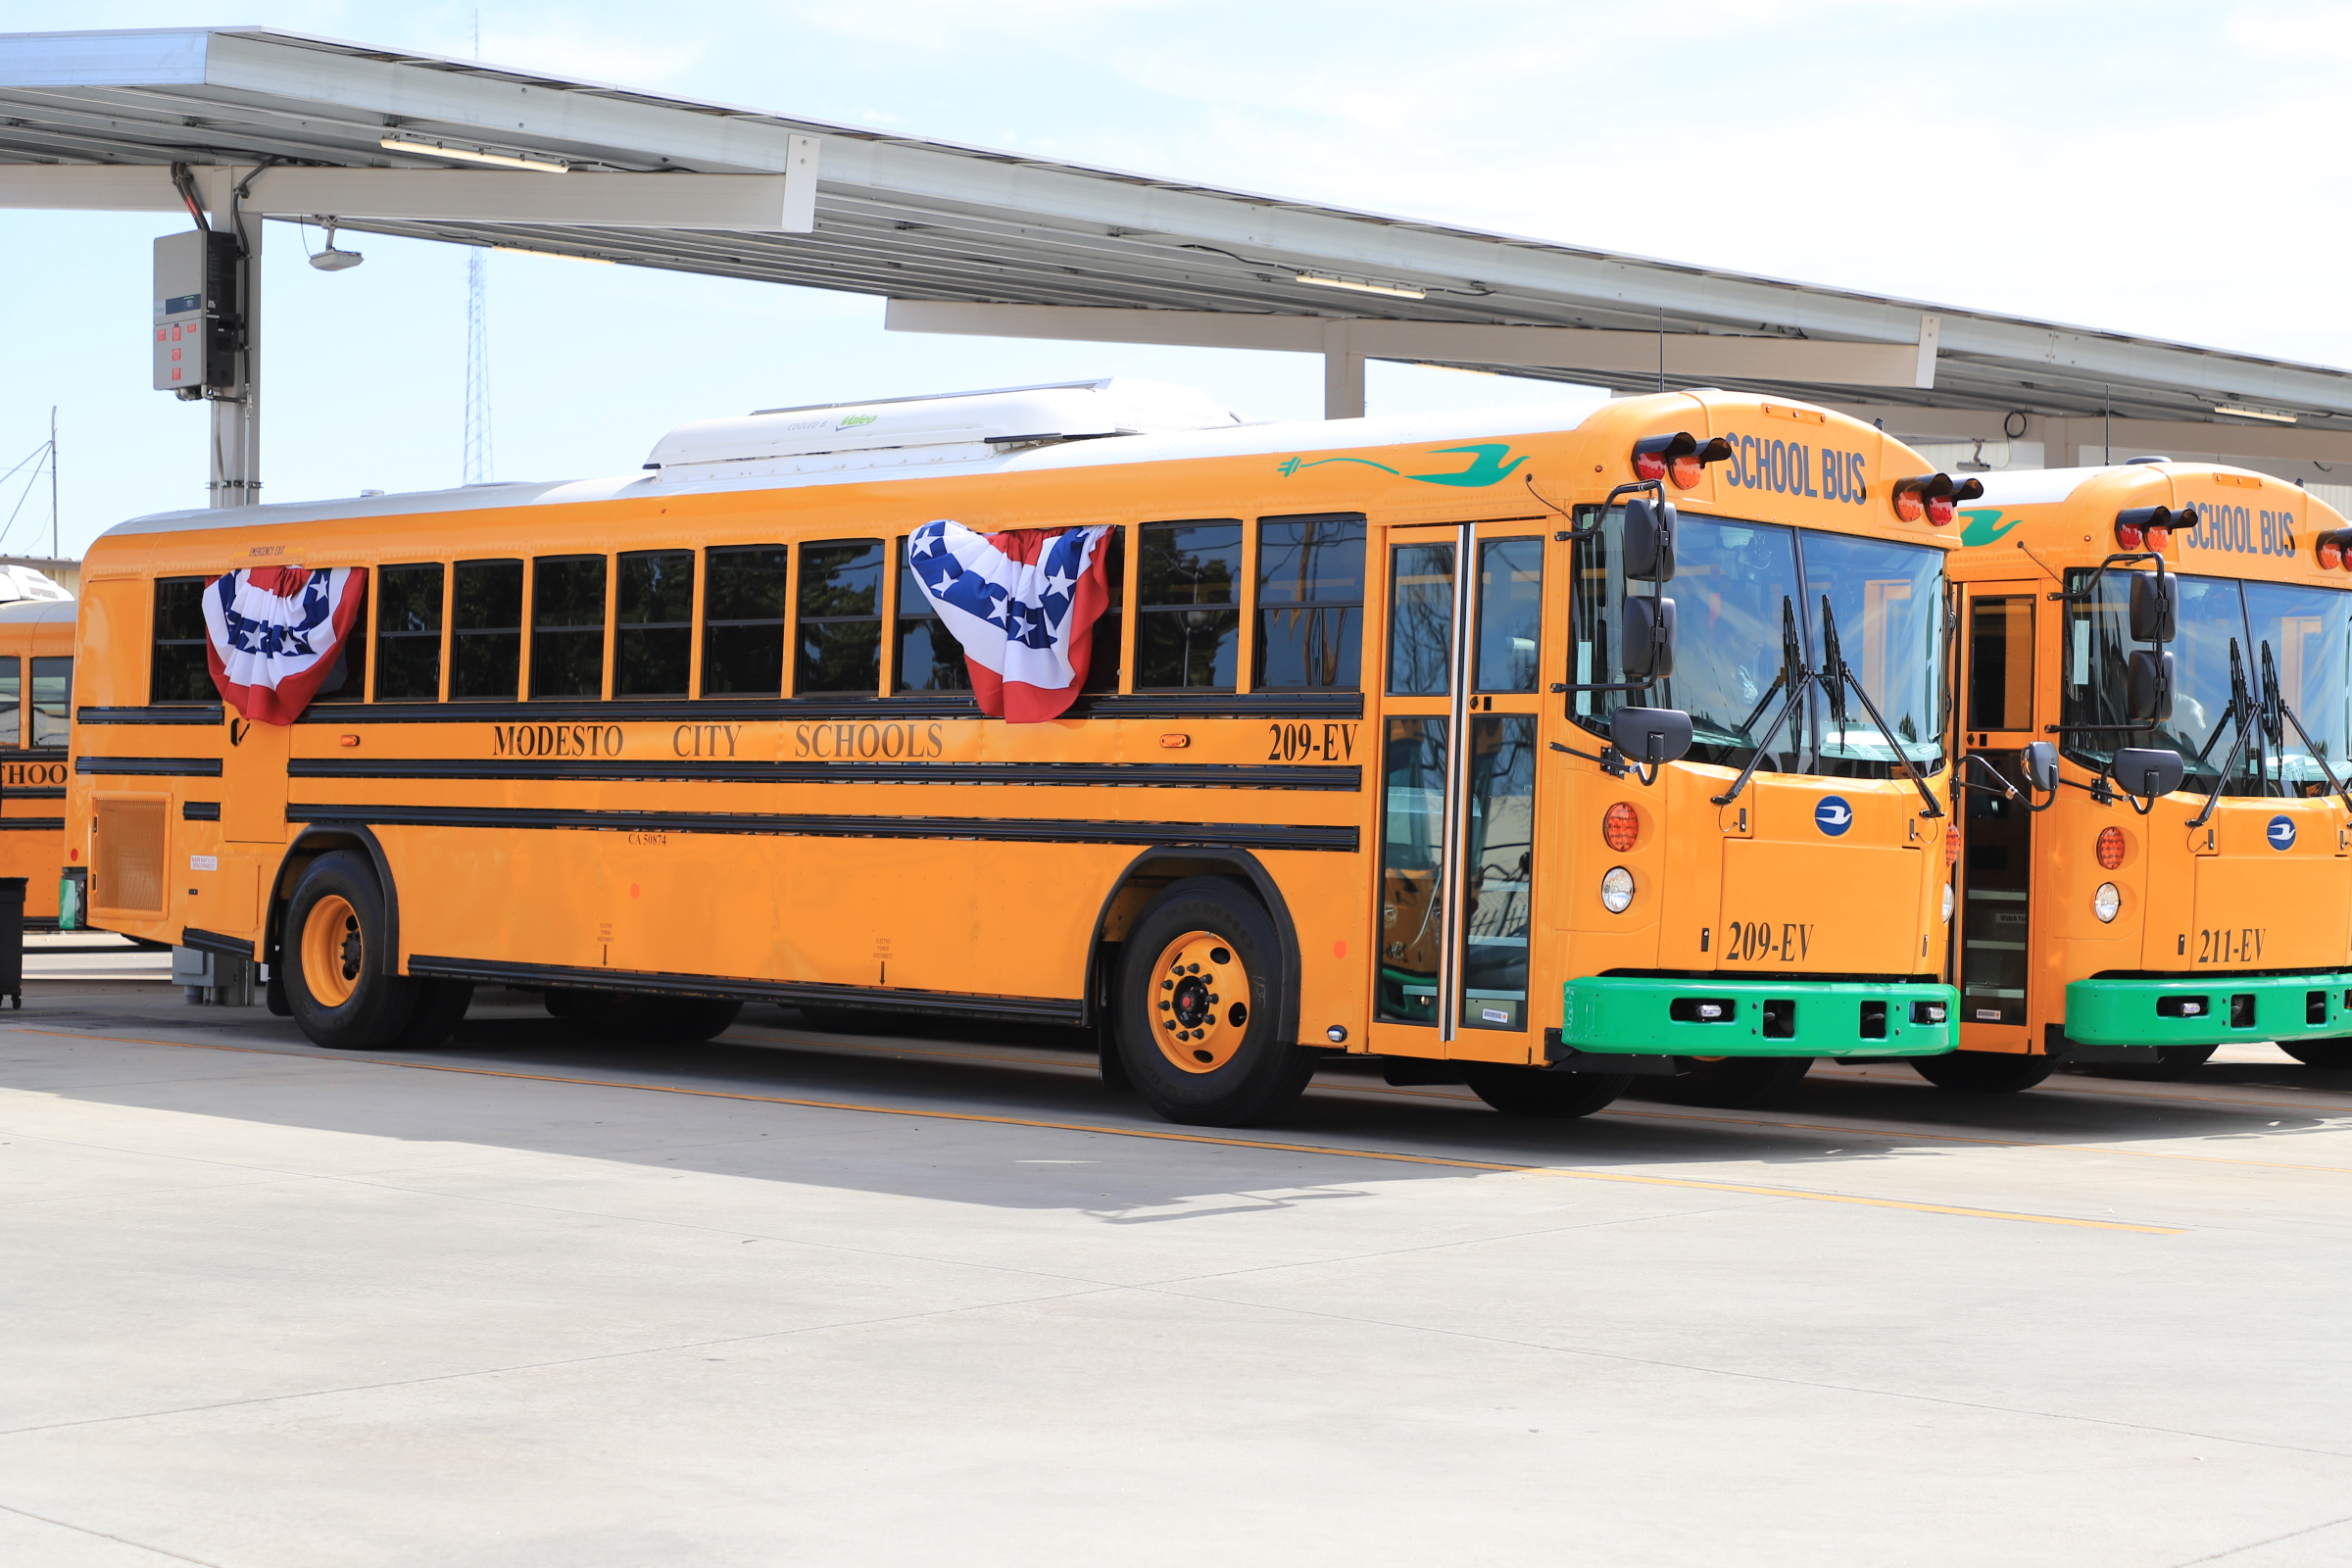 2 buses at the modesto city schools transportation yard